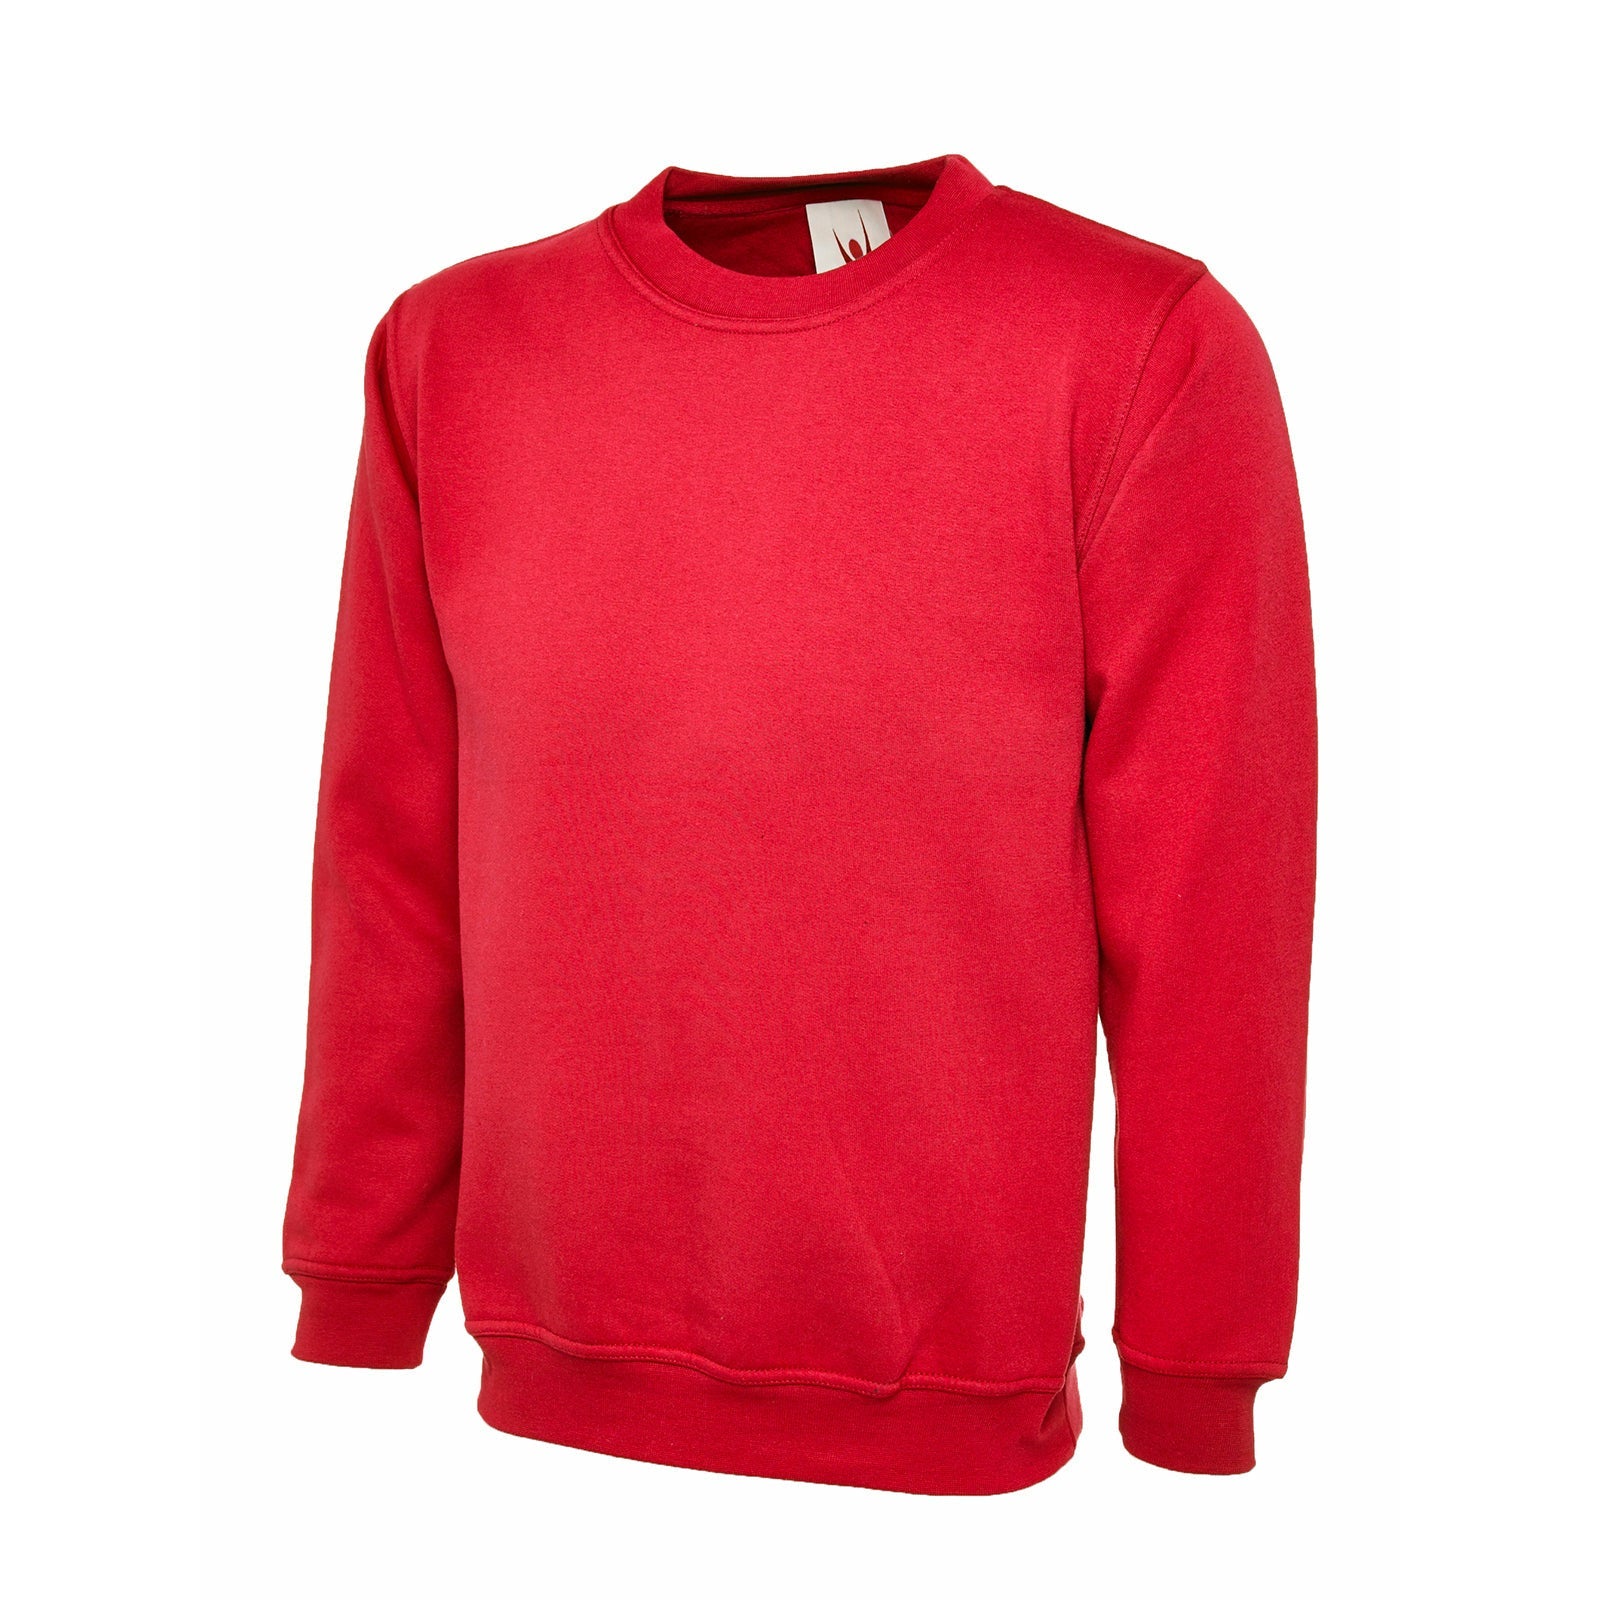 red crewneck sweatshirt